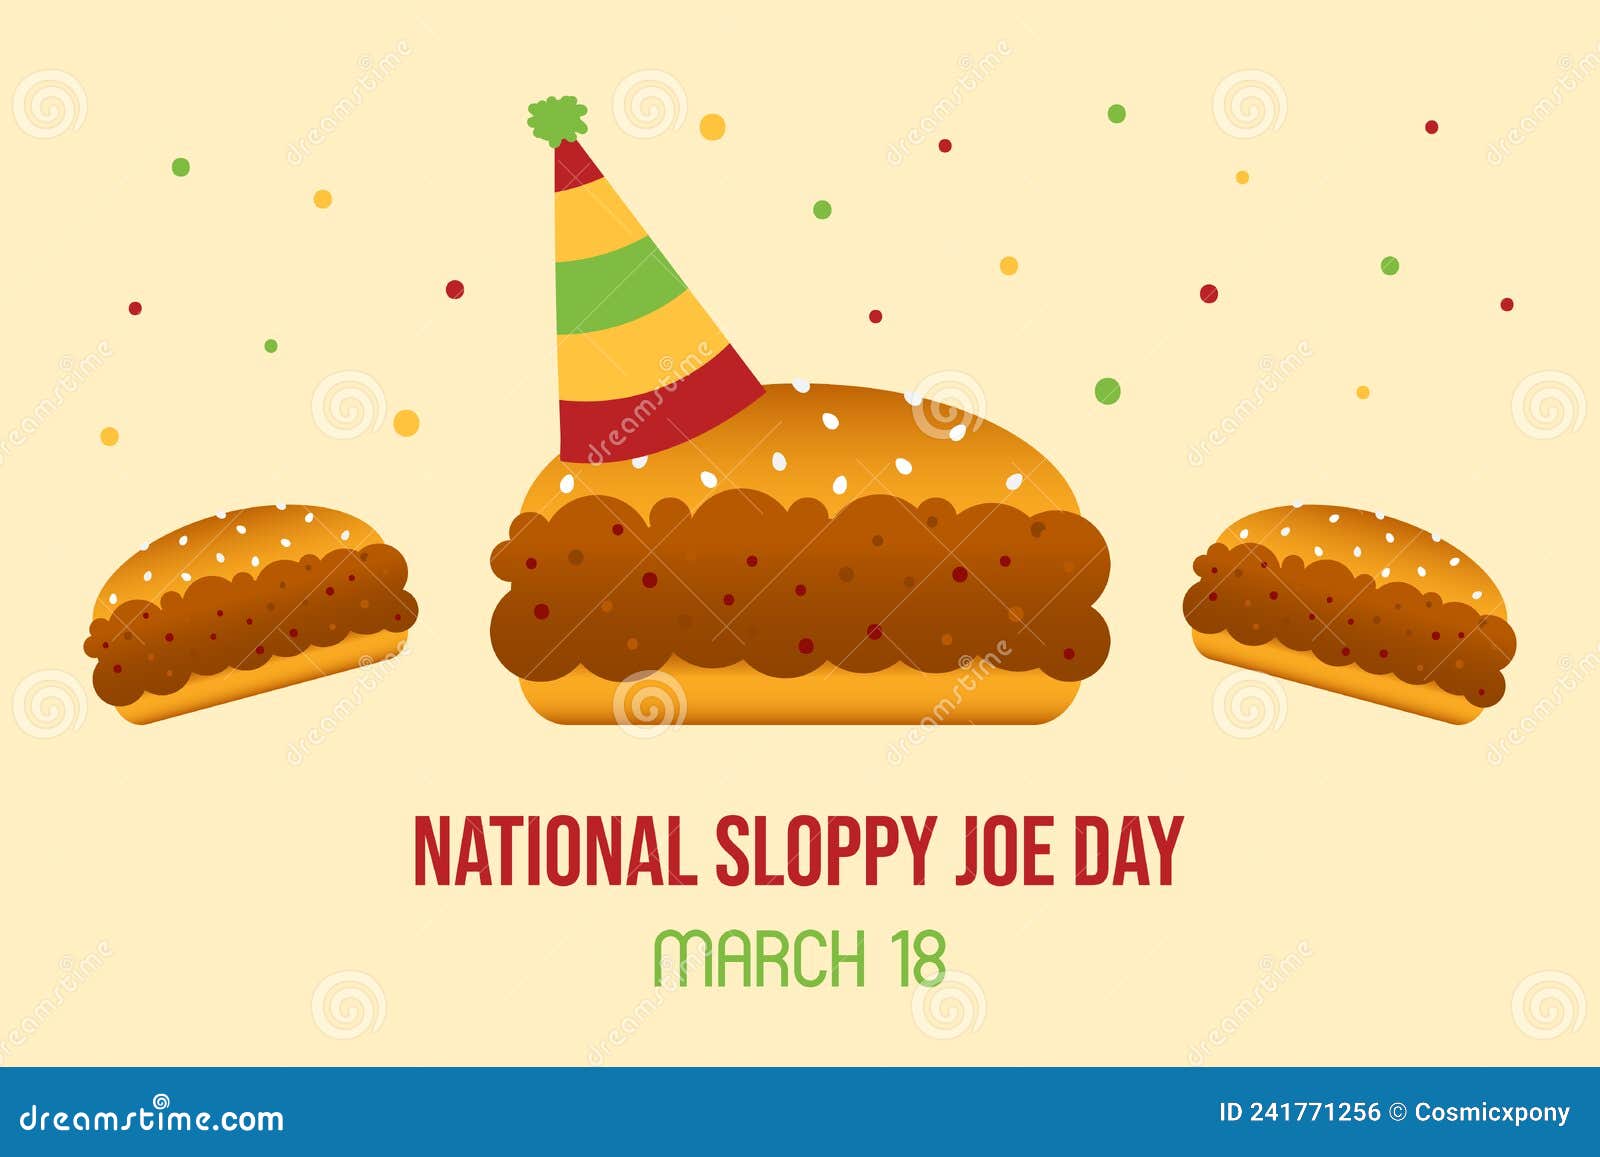 National Sloppy Joe Day Greeting Card, Illustration with Cute Cartoon